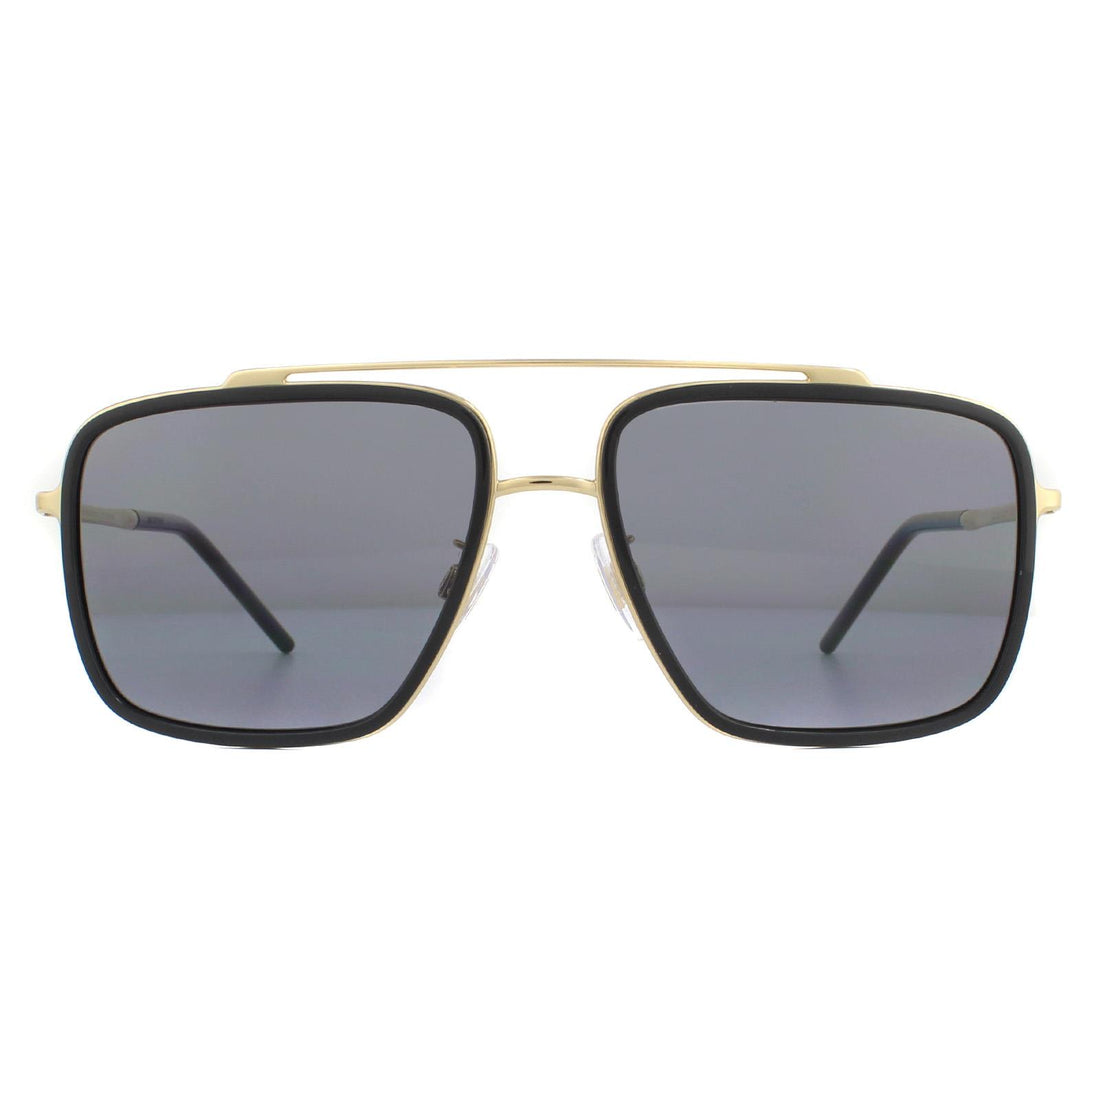 Dolce & Gabbana DG2220 Sunglasses Gold and Black Brown Gradient Polarized